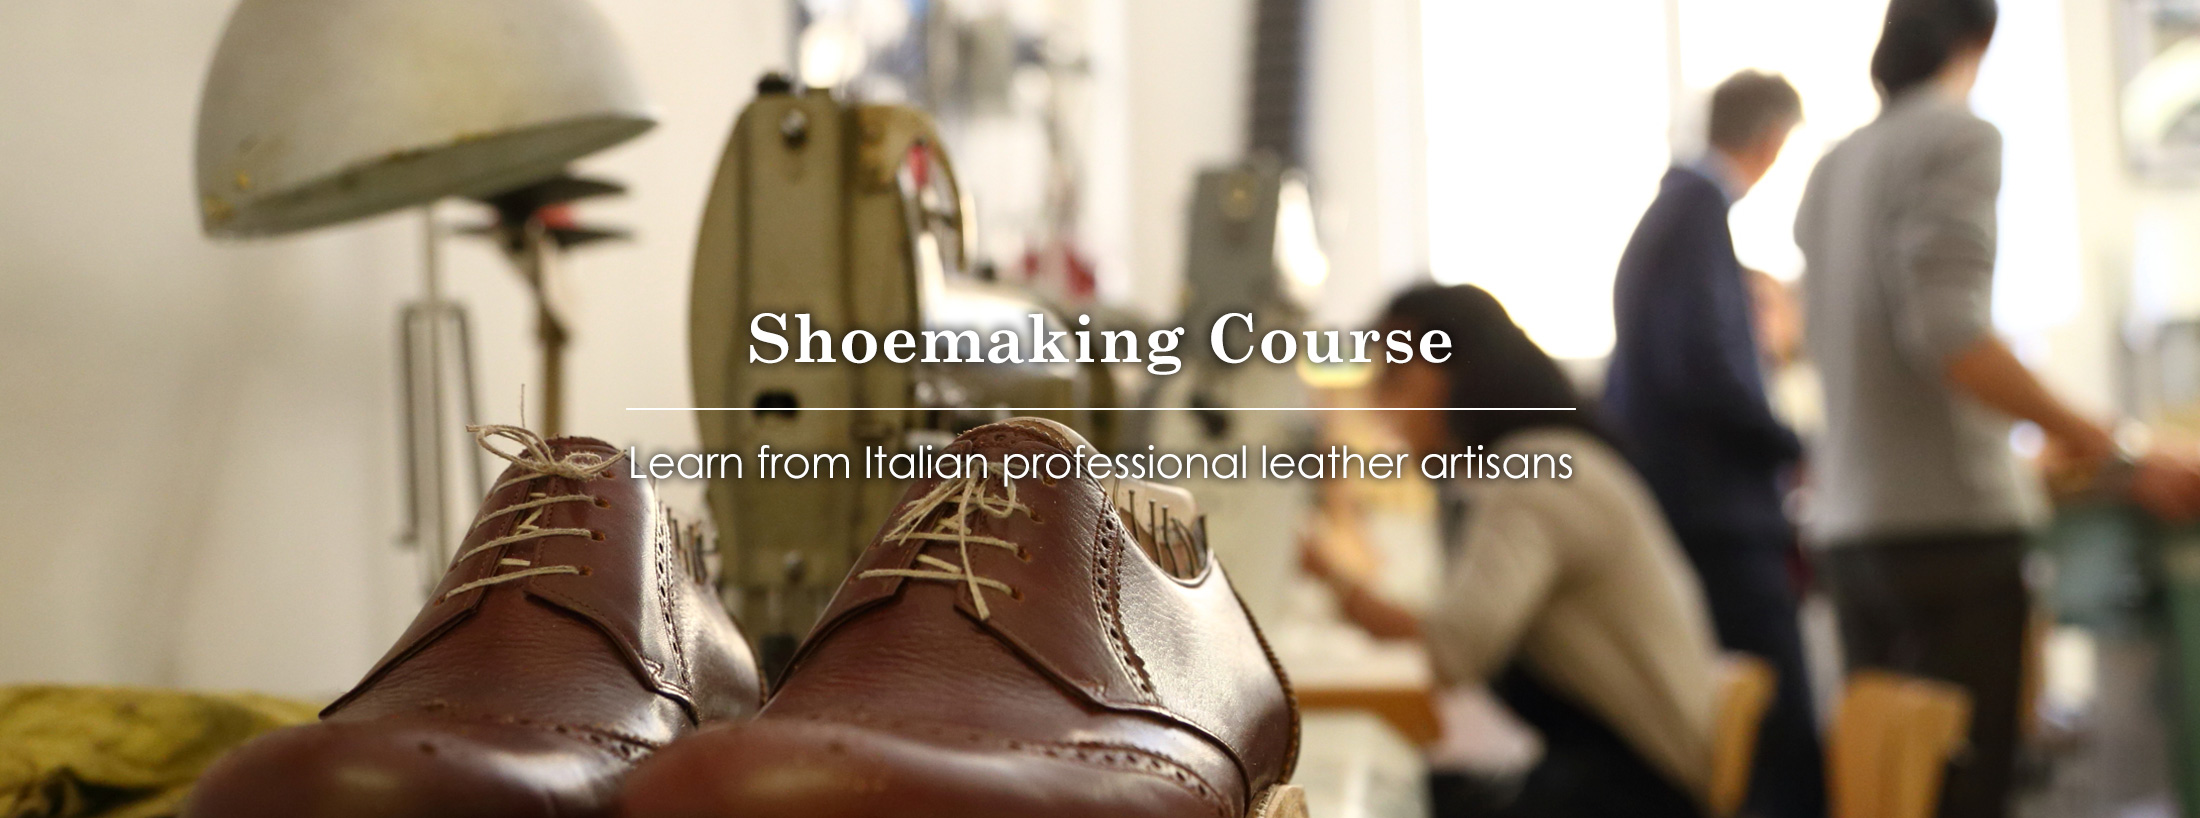 Shoemaking Course